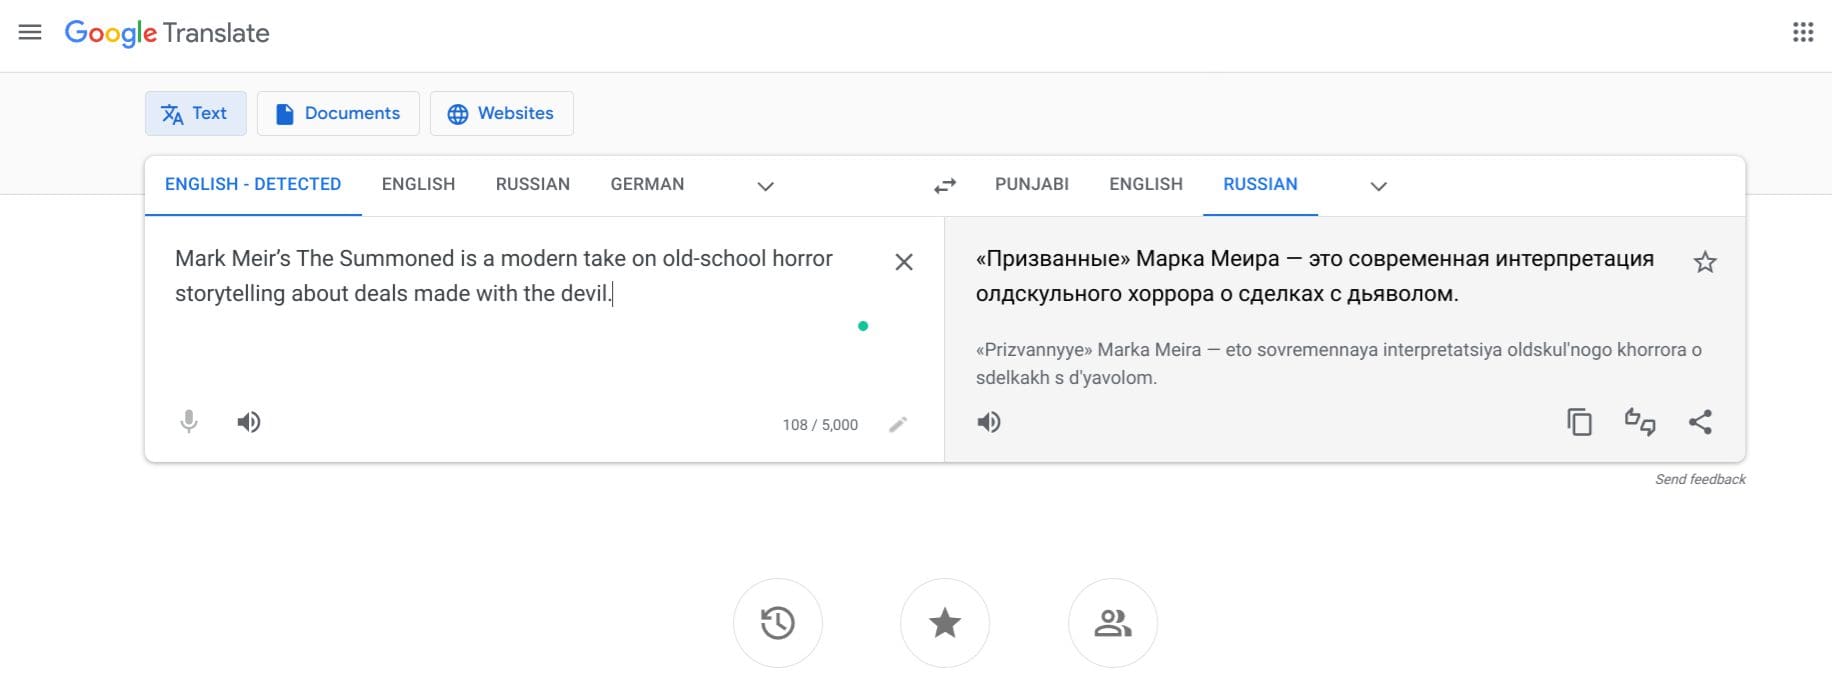 Google Translate major window